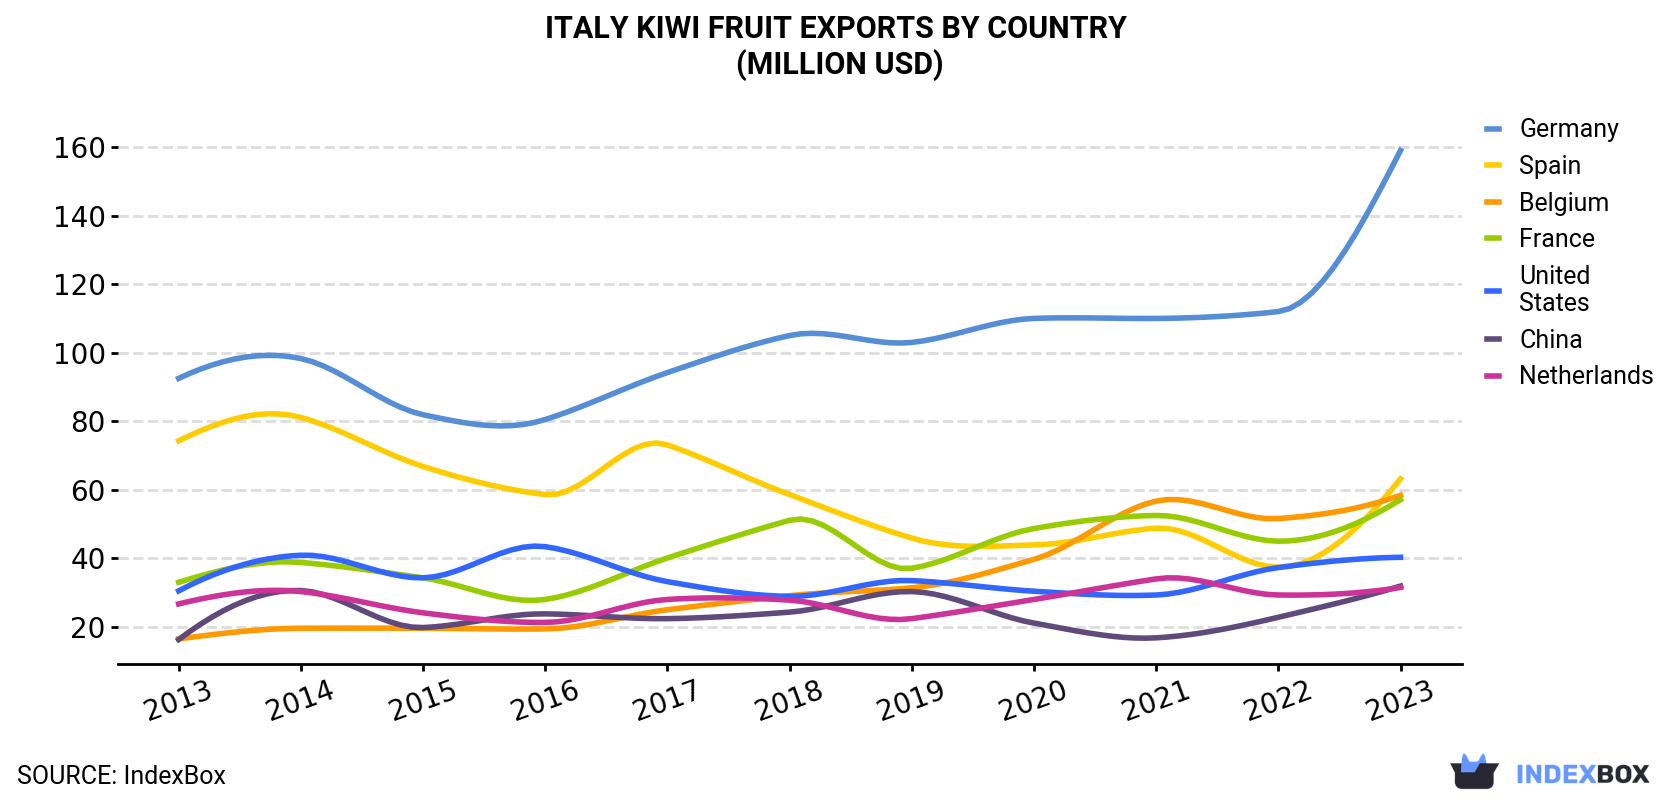 Italy Kiwi Fruit Exports By Country (Million USD)